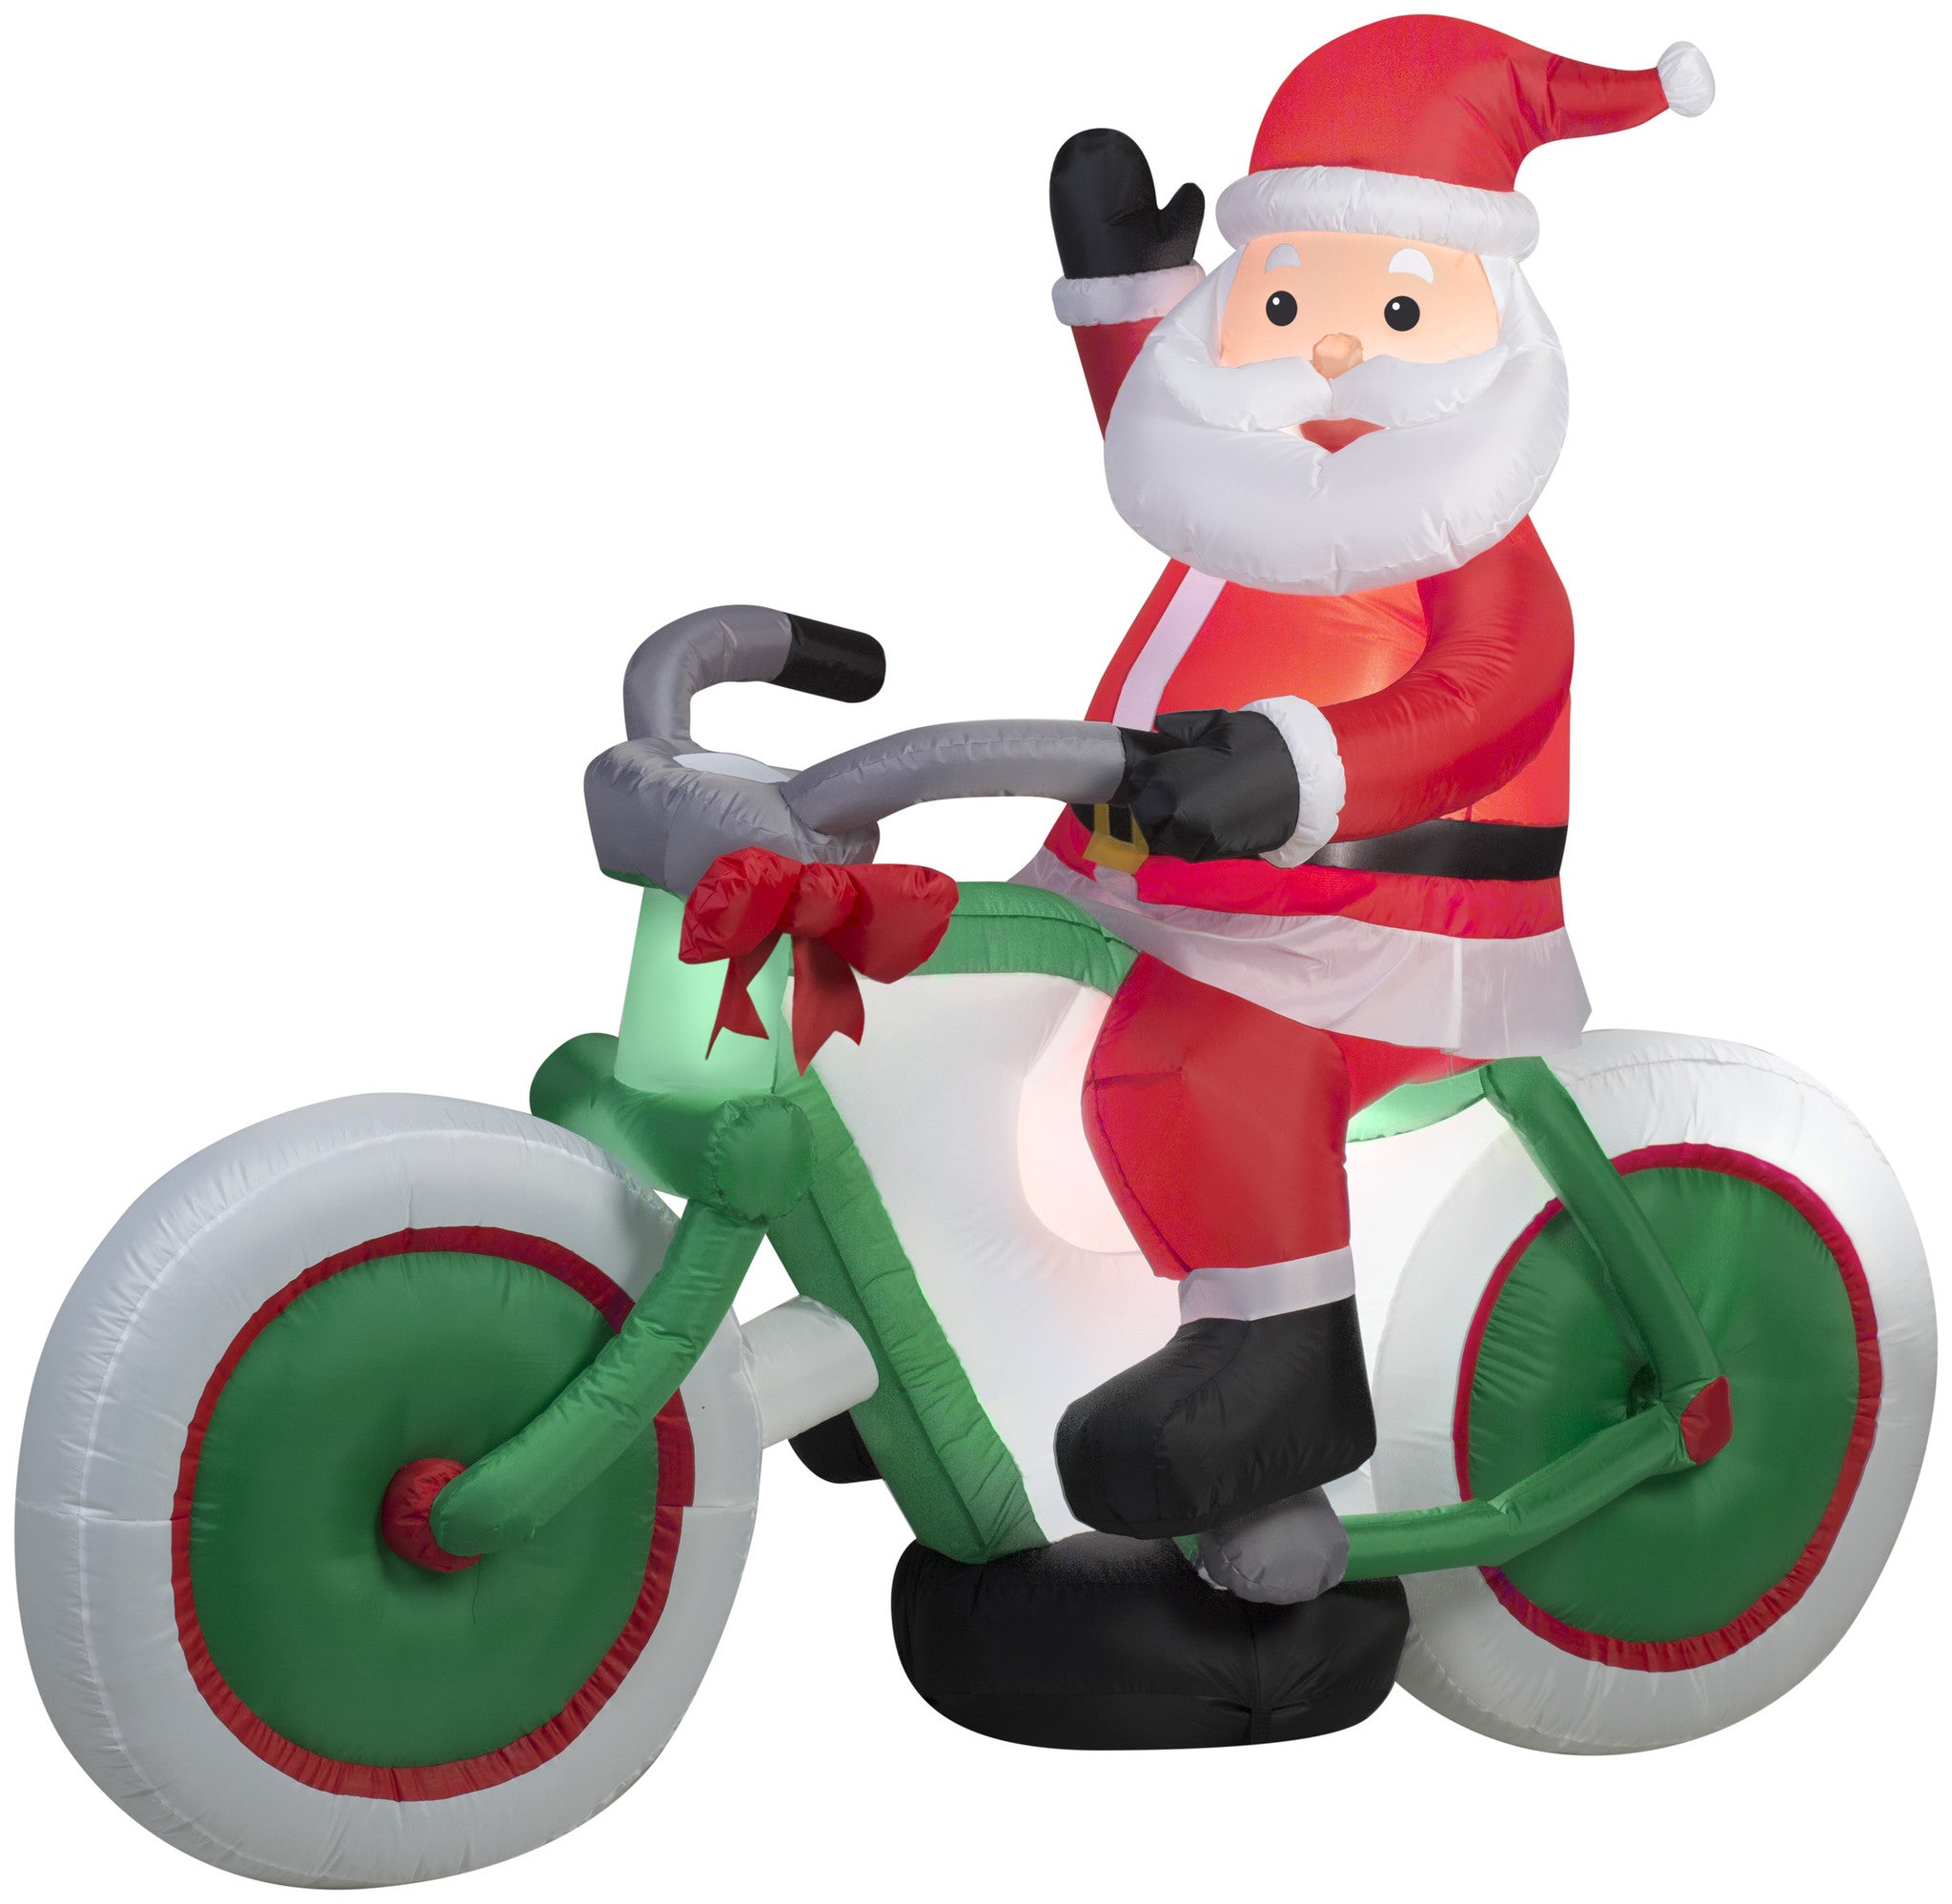 Santa Claus riding a bicycle airblown